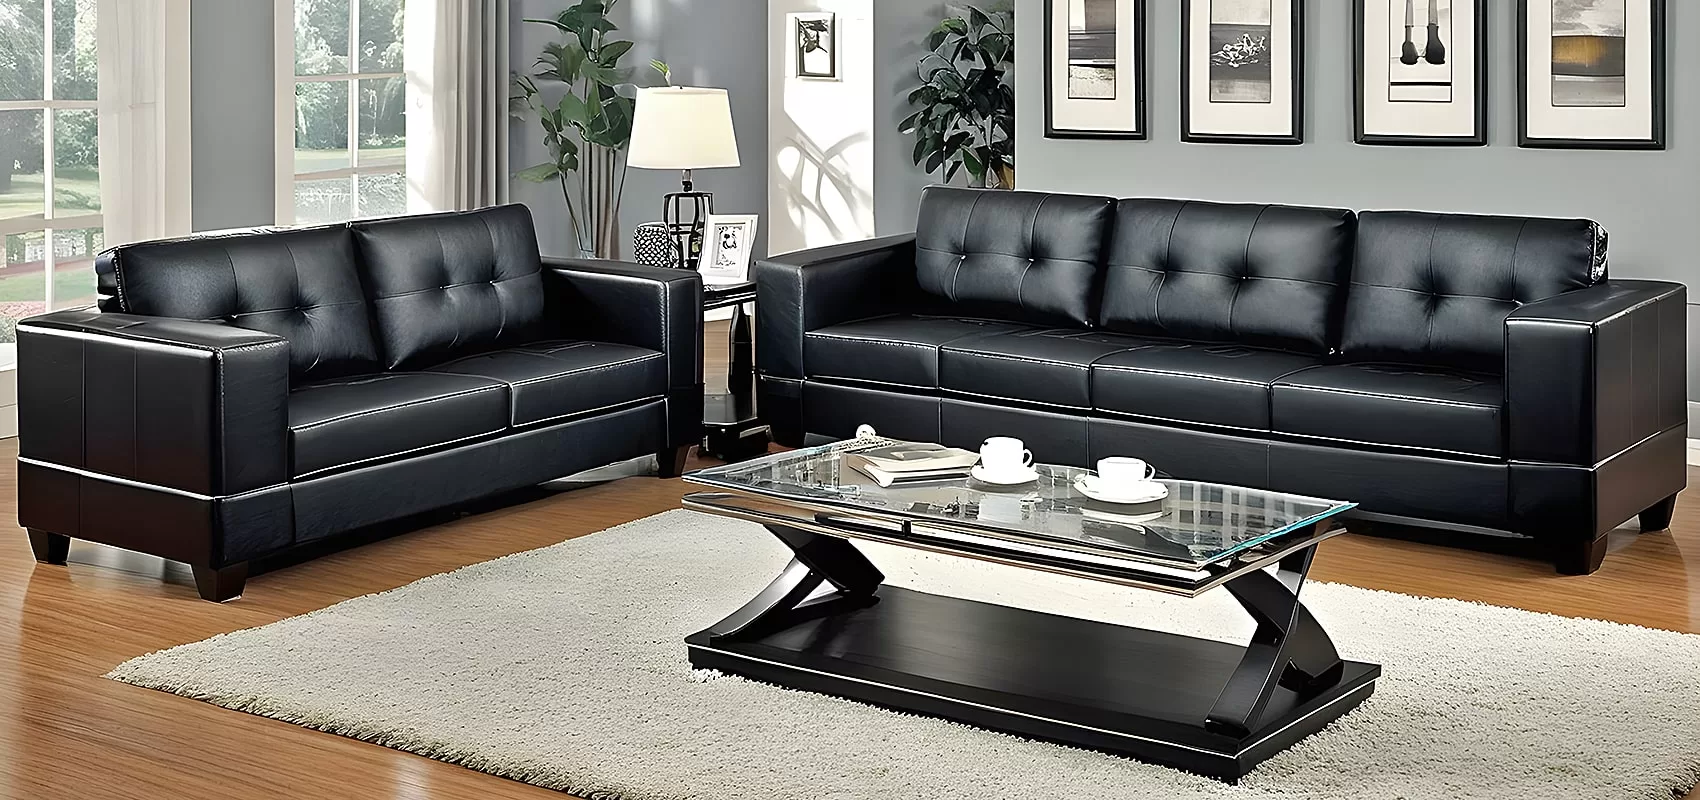 Black Couch Black Sofa Feature Min Jpg.webp